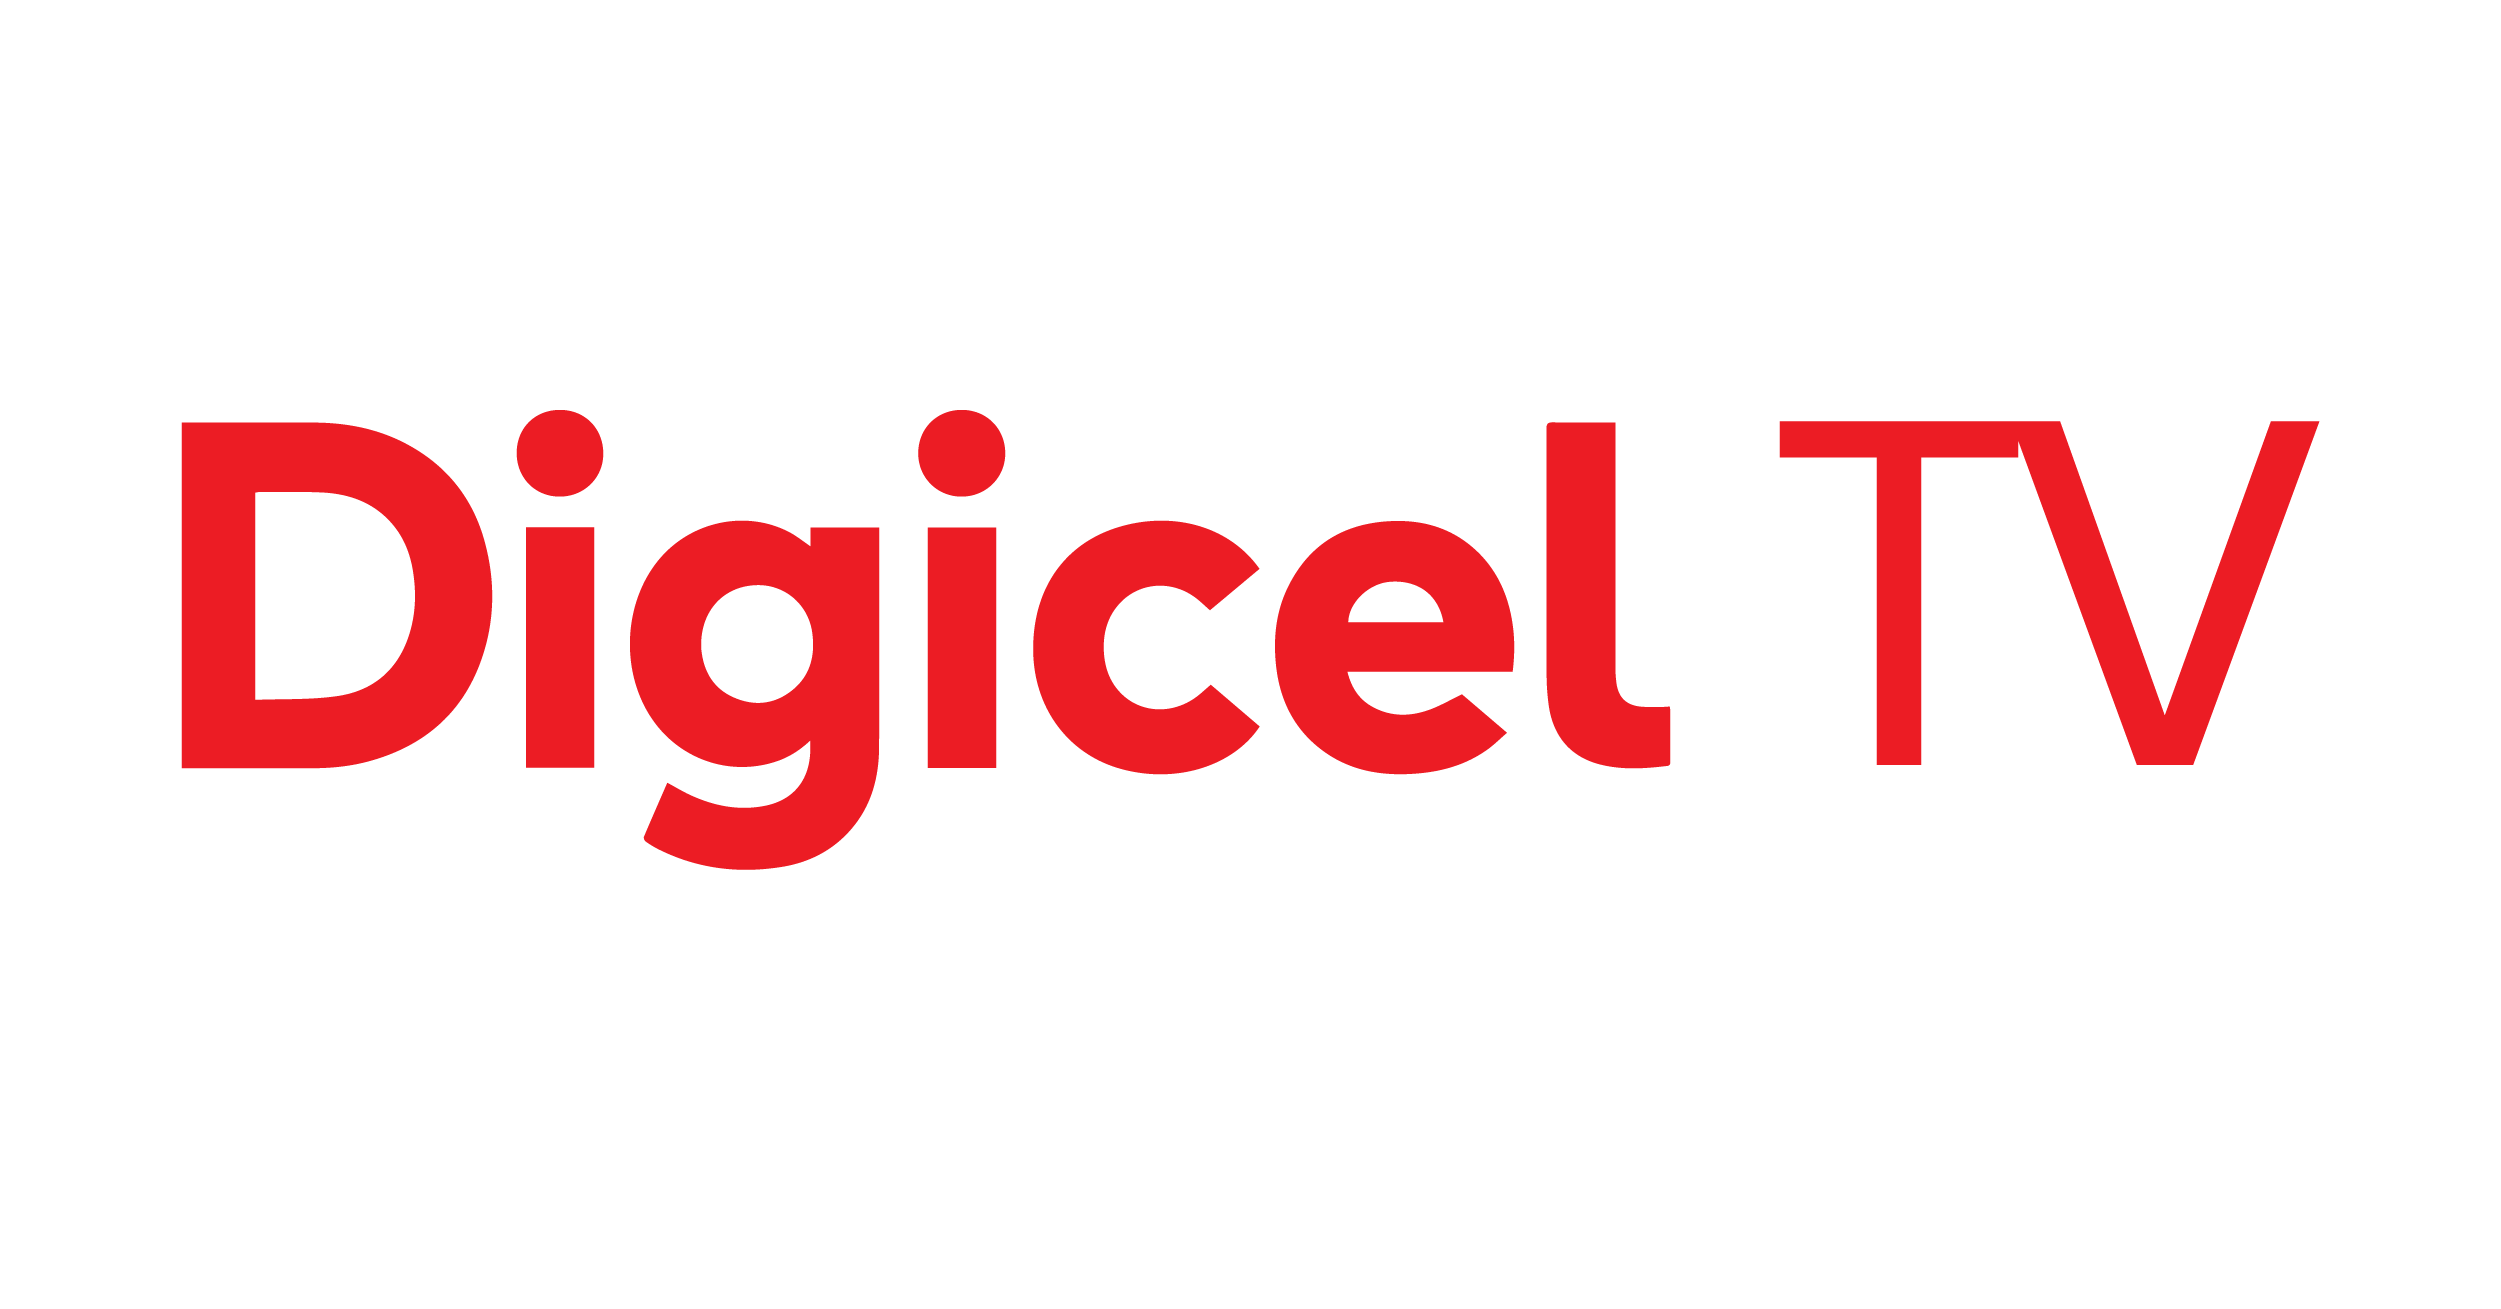 A red DigicelTV logo